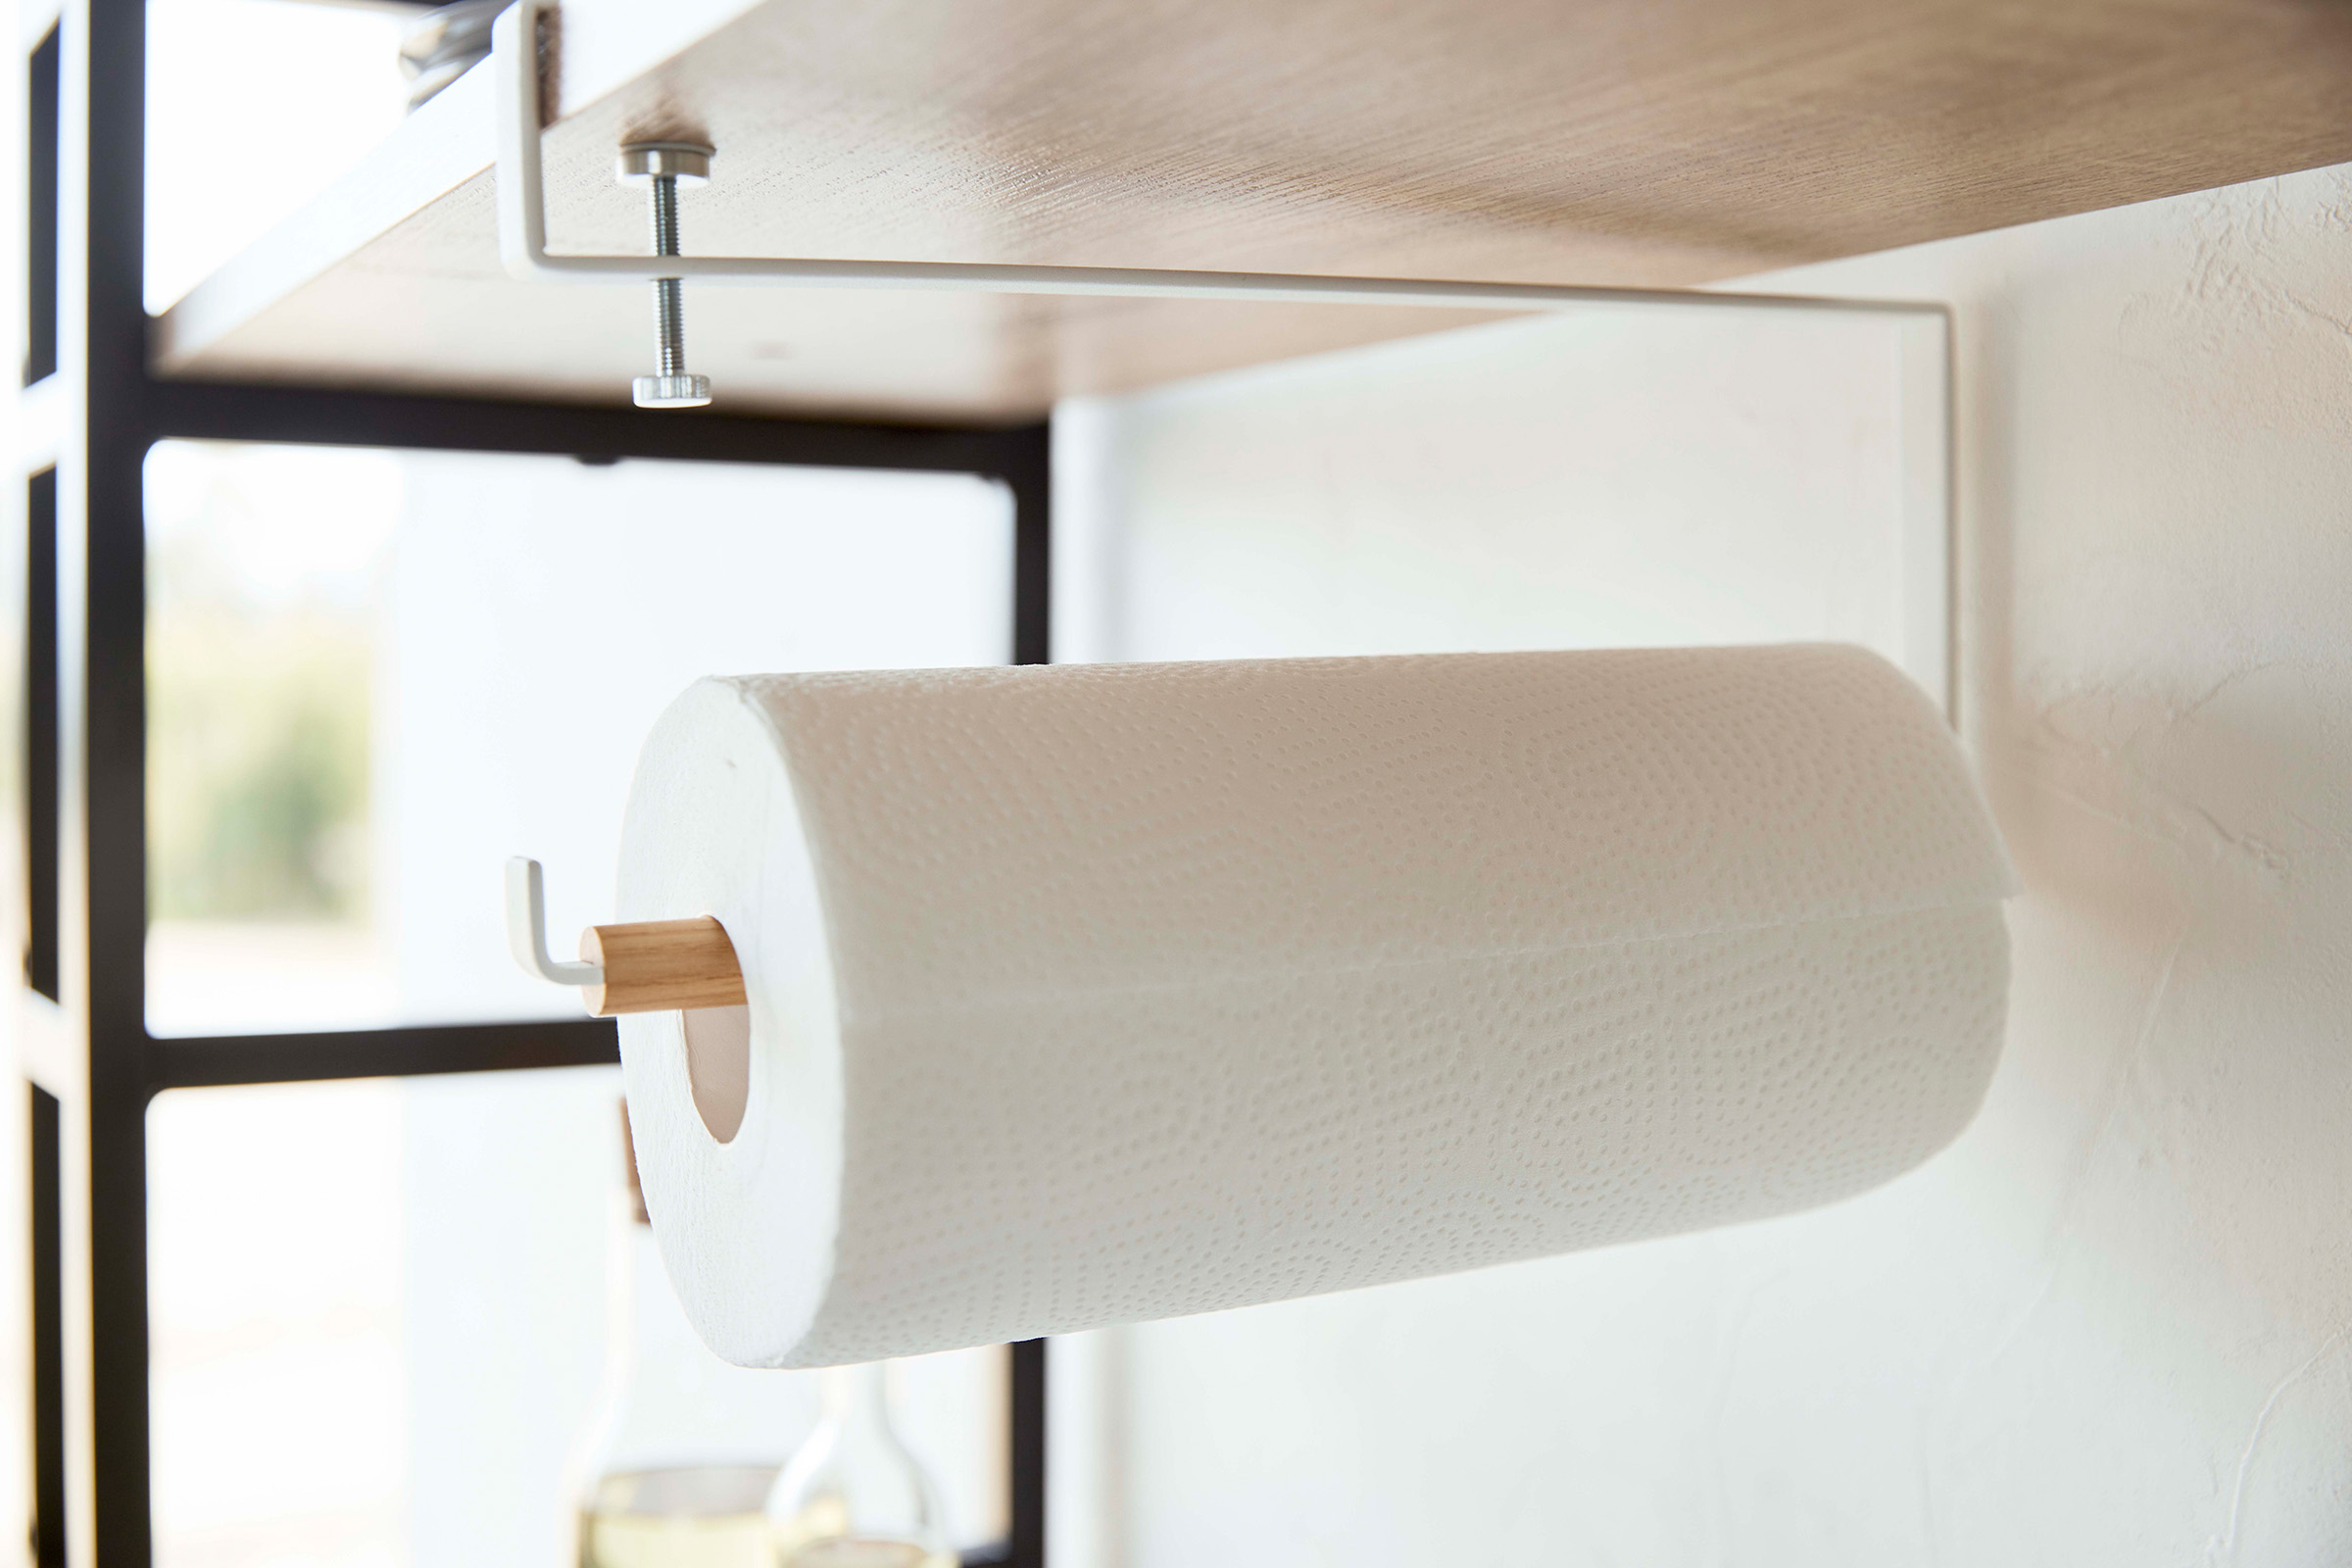 Yamazaki Home Undershelf Paper Towel Holder with paper towel inserted